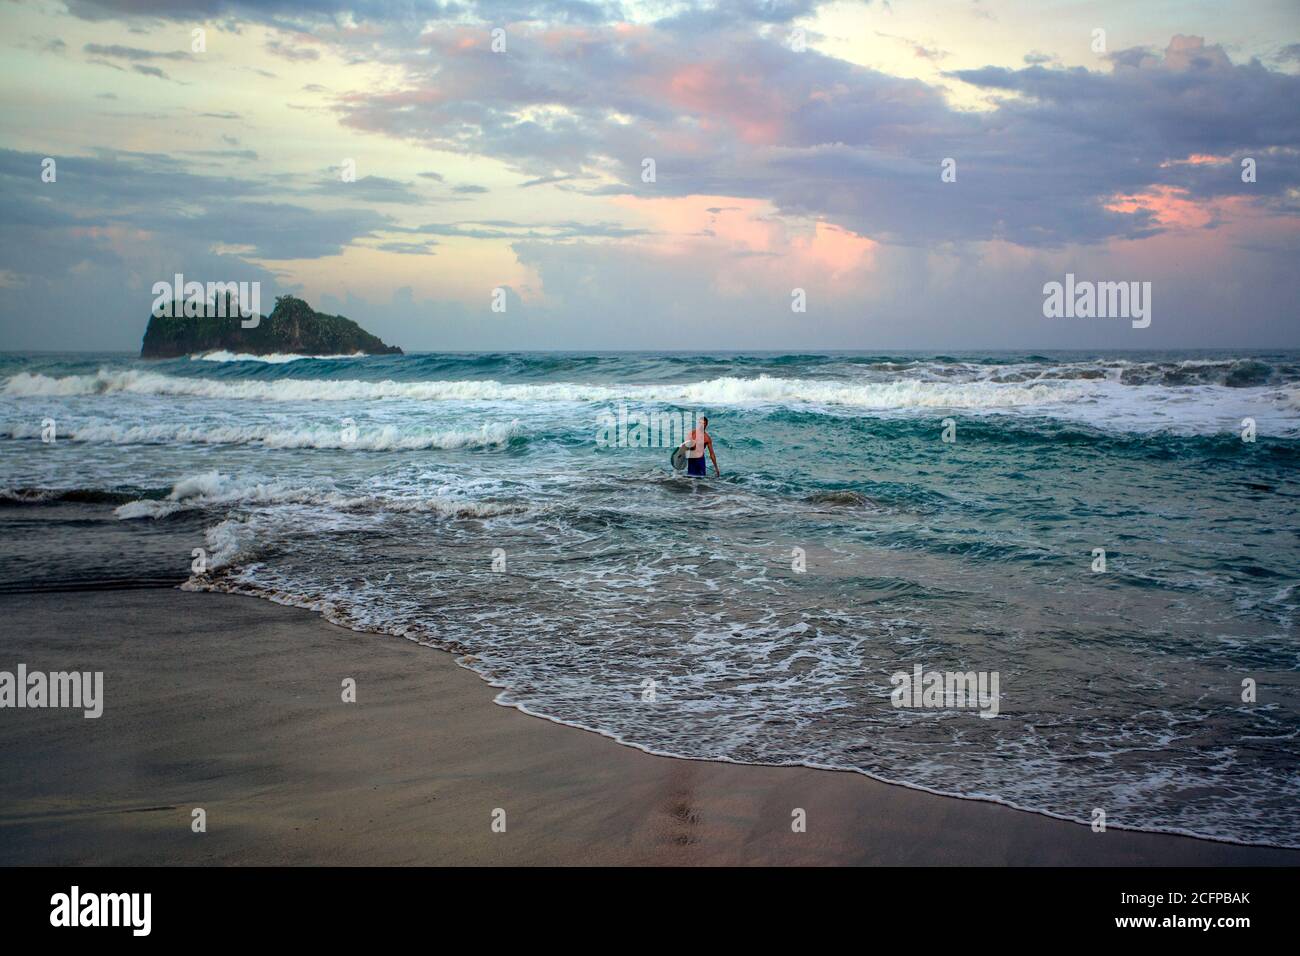 ©Jarmila ☼ ☼ ☼ Pura Vida, Costa Rica dream  Sand and Fun and Surfing in Puerto Viejo  © Jarmila Stock Photo